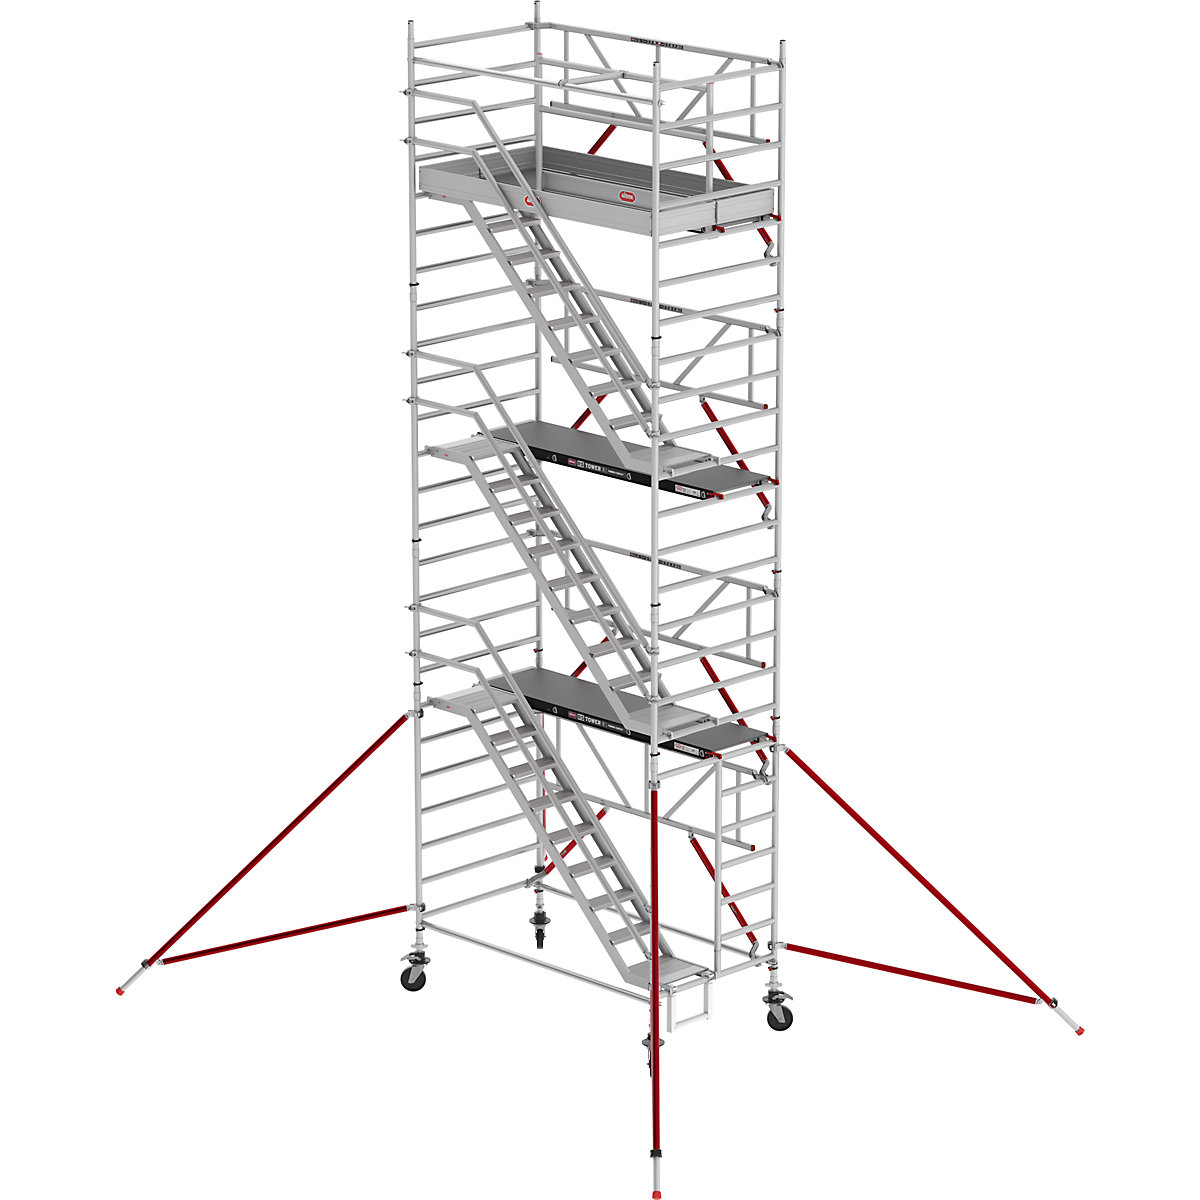 Oder s stopnicami RS TOWER 53, širok – Altrex, lesena ploščad, dolžina 1,85 m, delovna višina 8,20 m